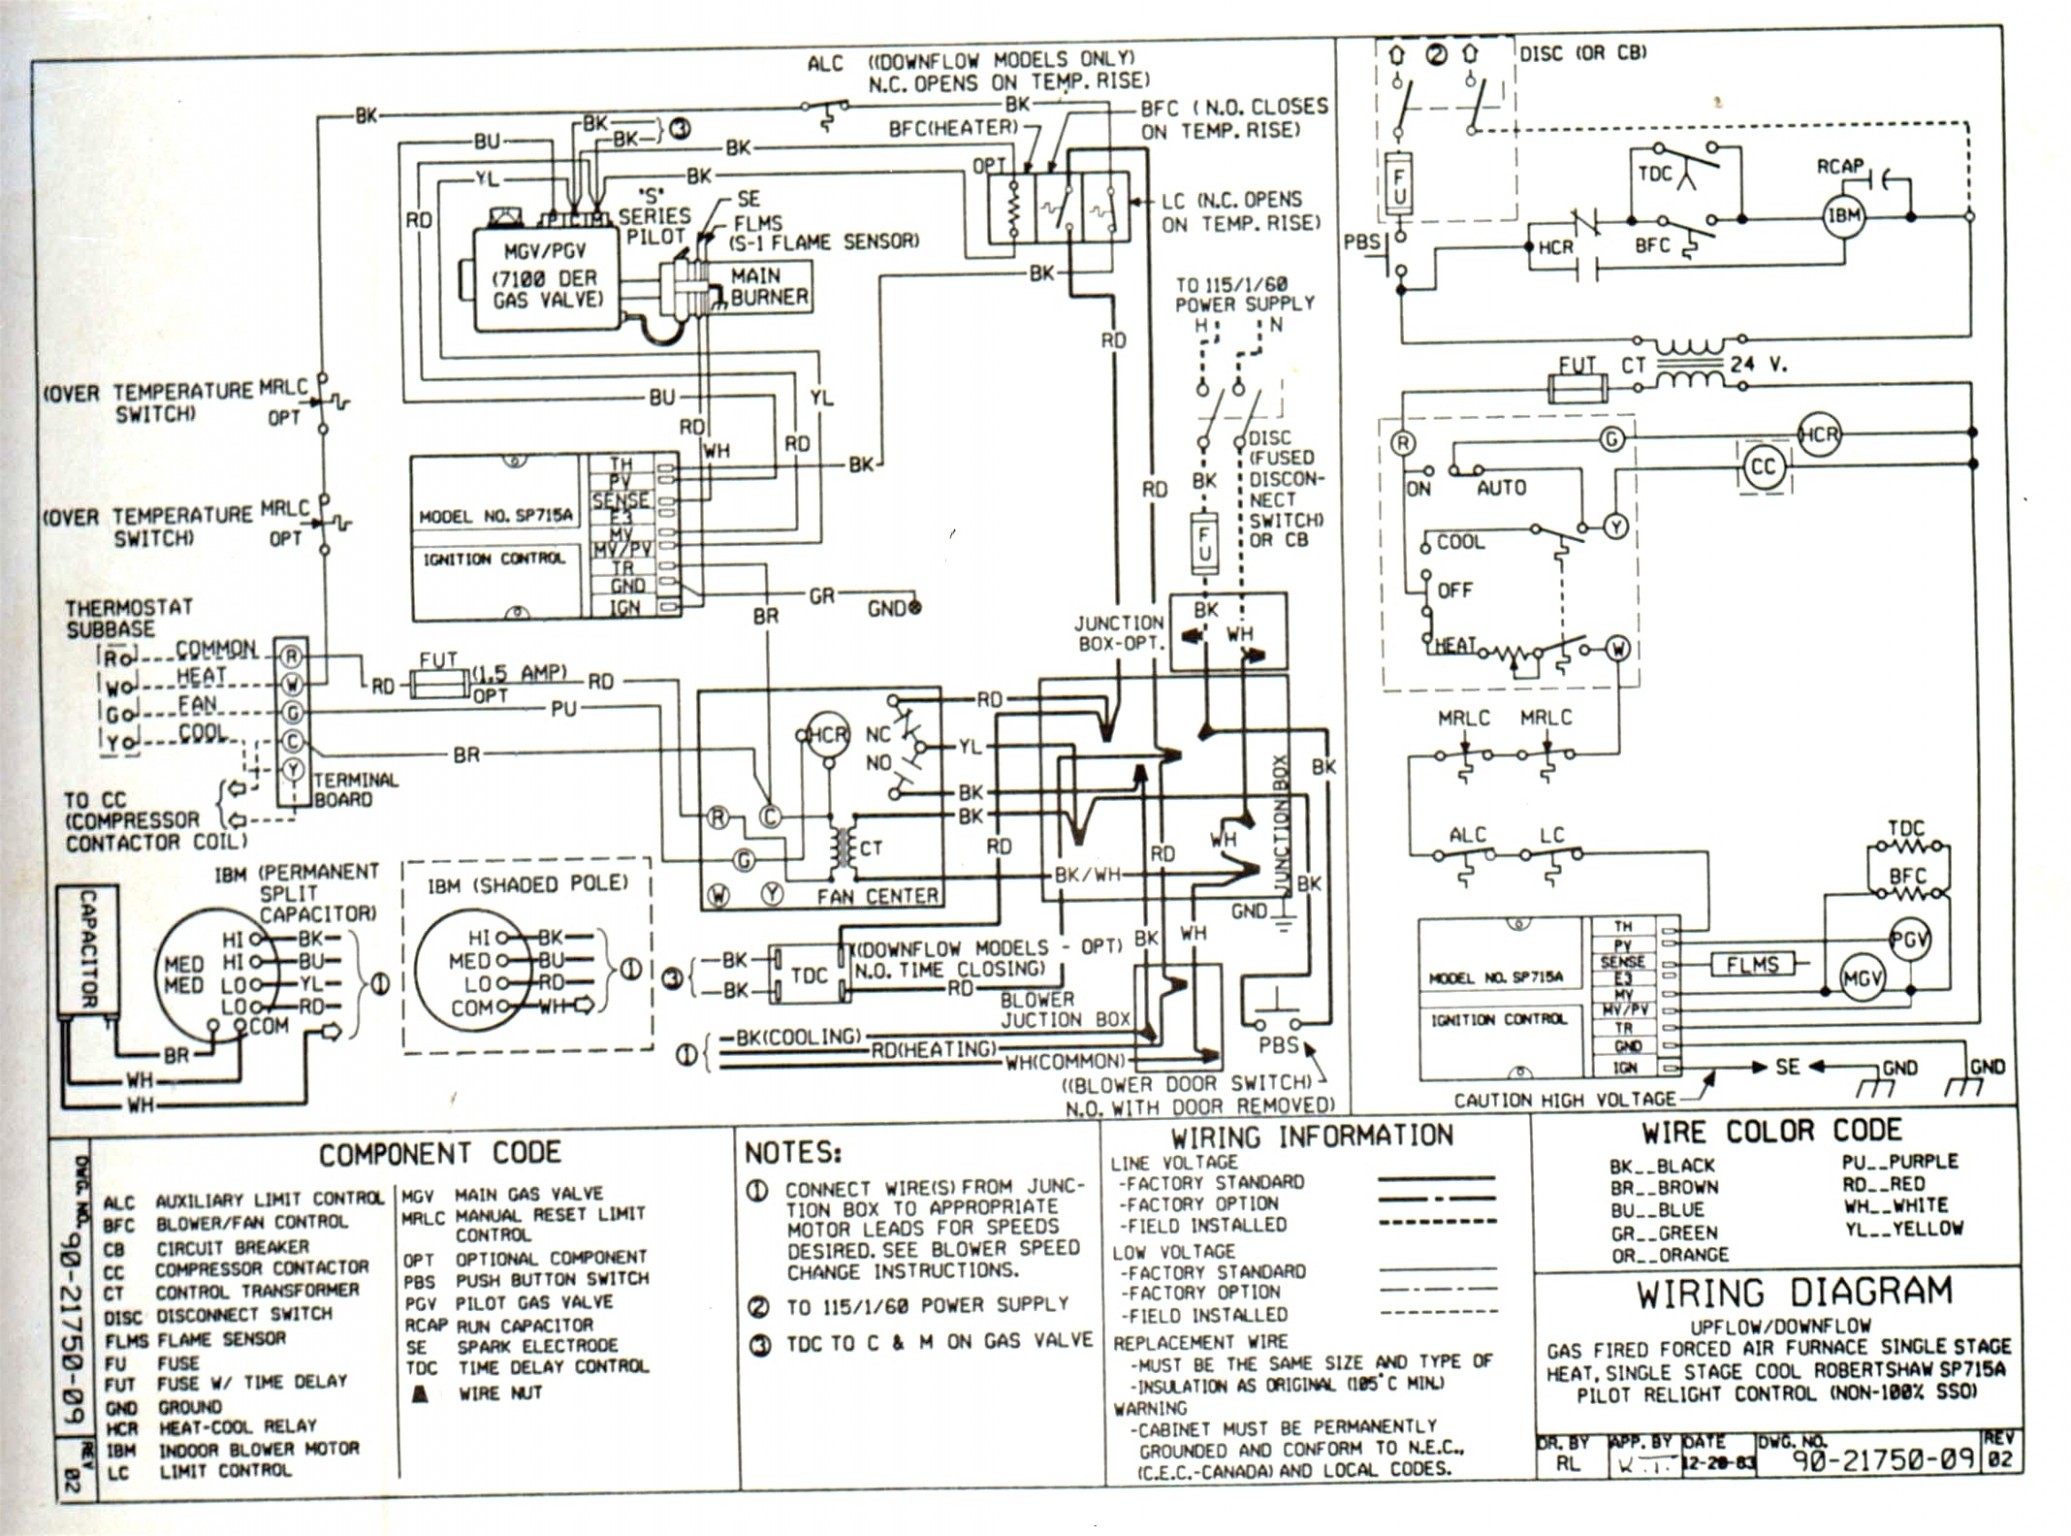 Beckett Oil Burner Parts Diagram thermostat Wiring Diagram Furthermore Oil Furnace Wiring Diagram as Of Beckett Oil Burner Parts Diagram